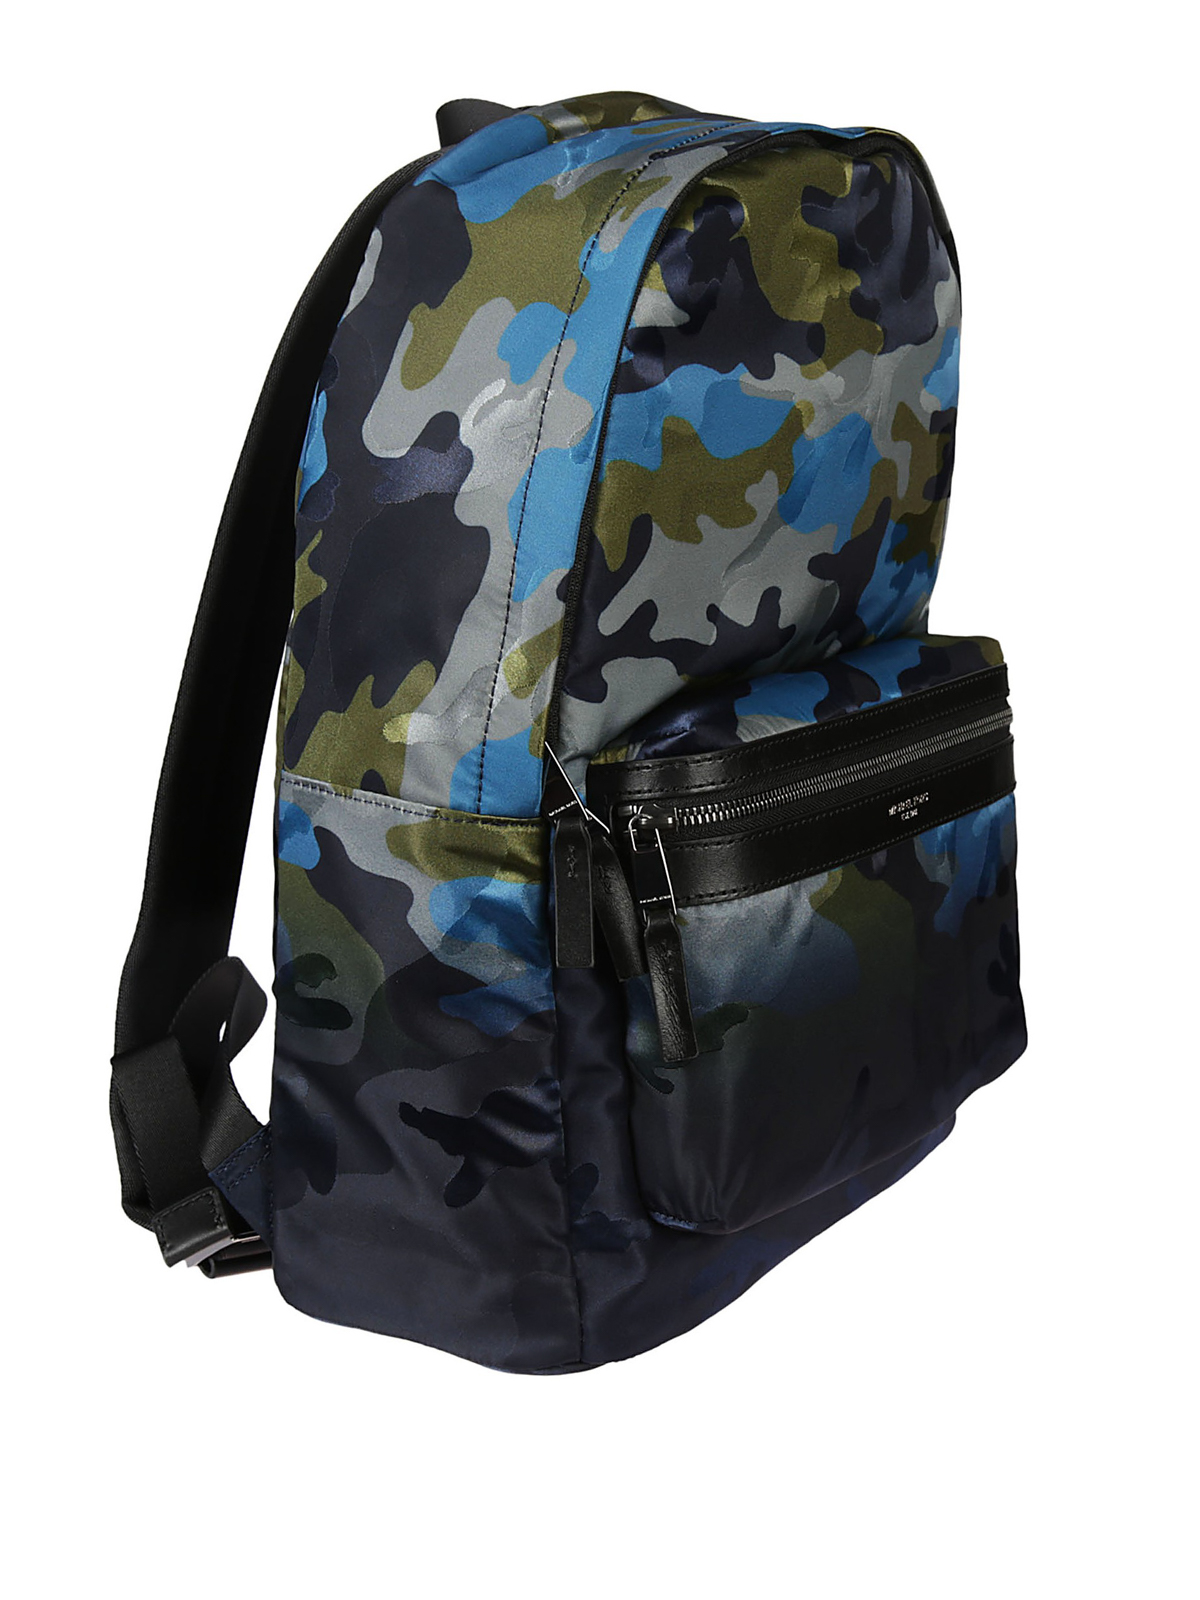 michael kors camouflage backpack